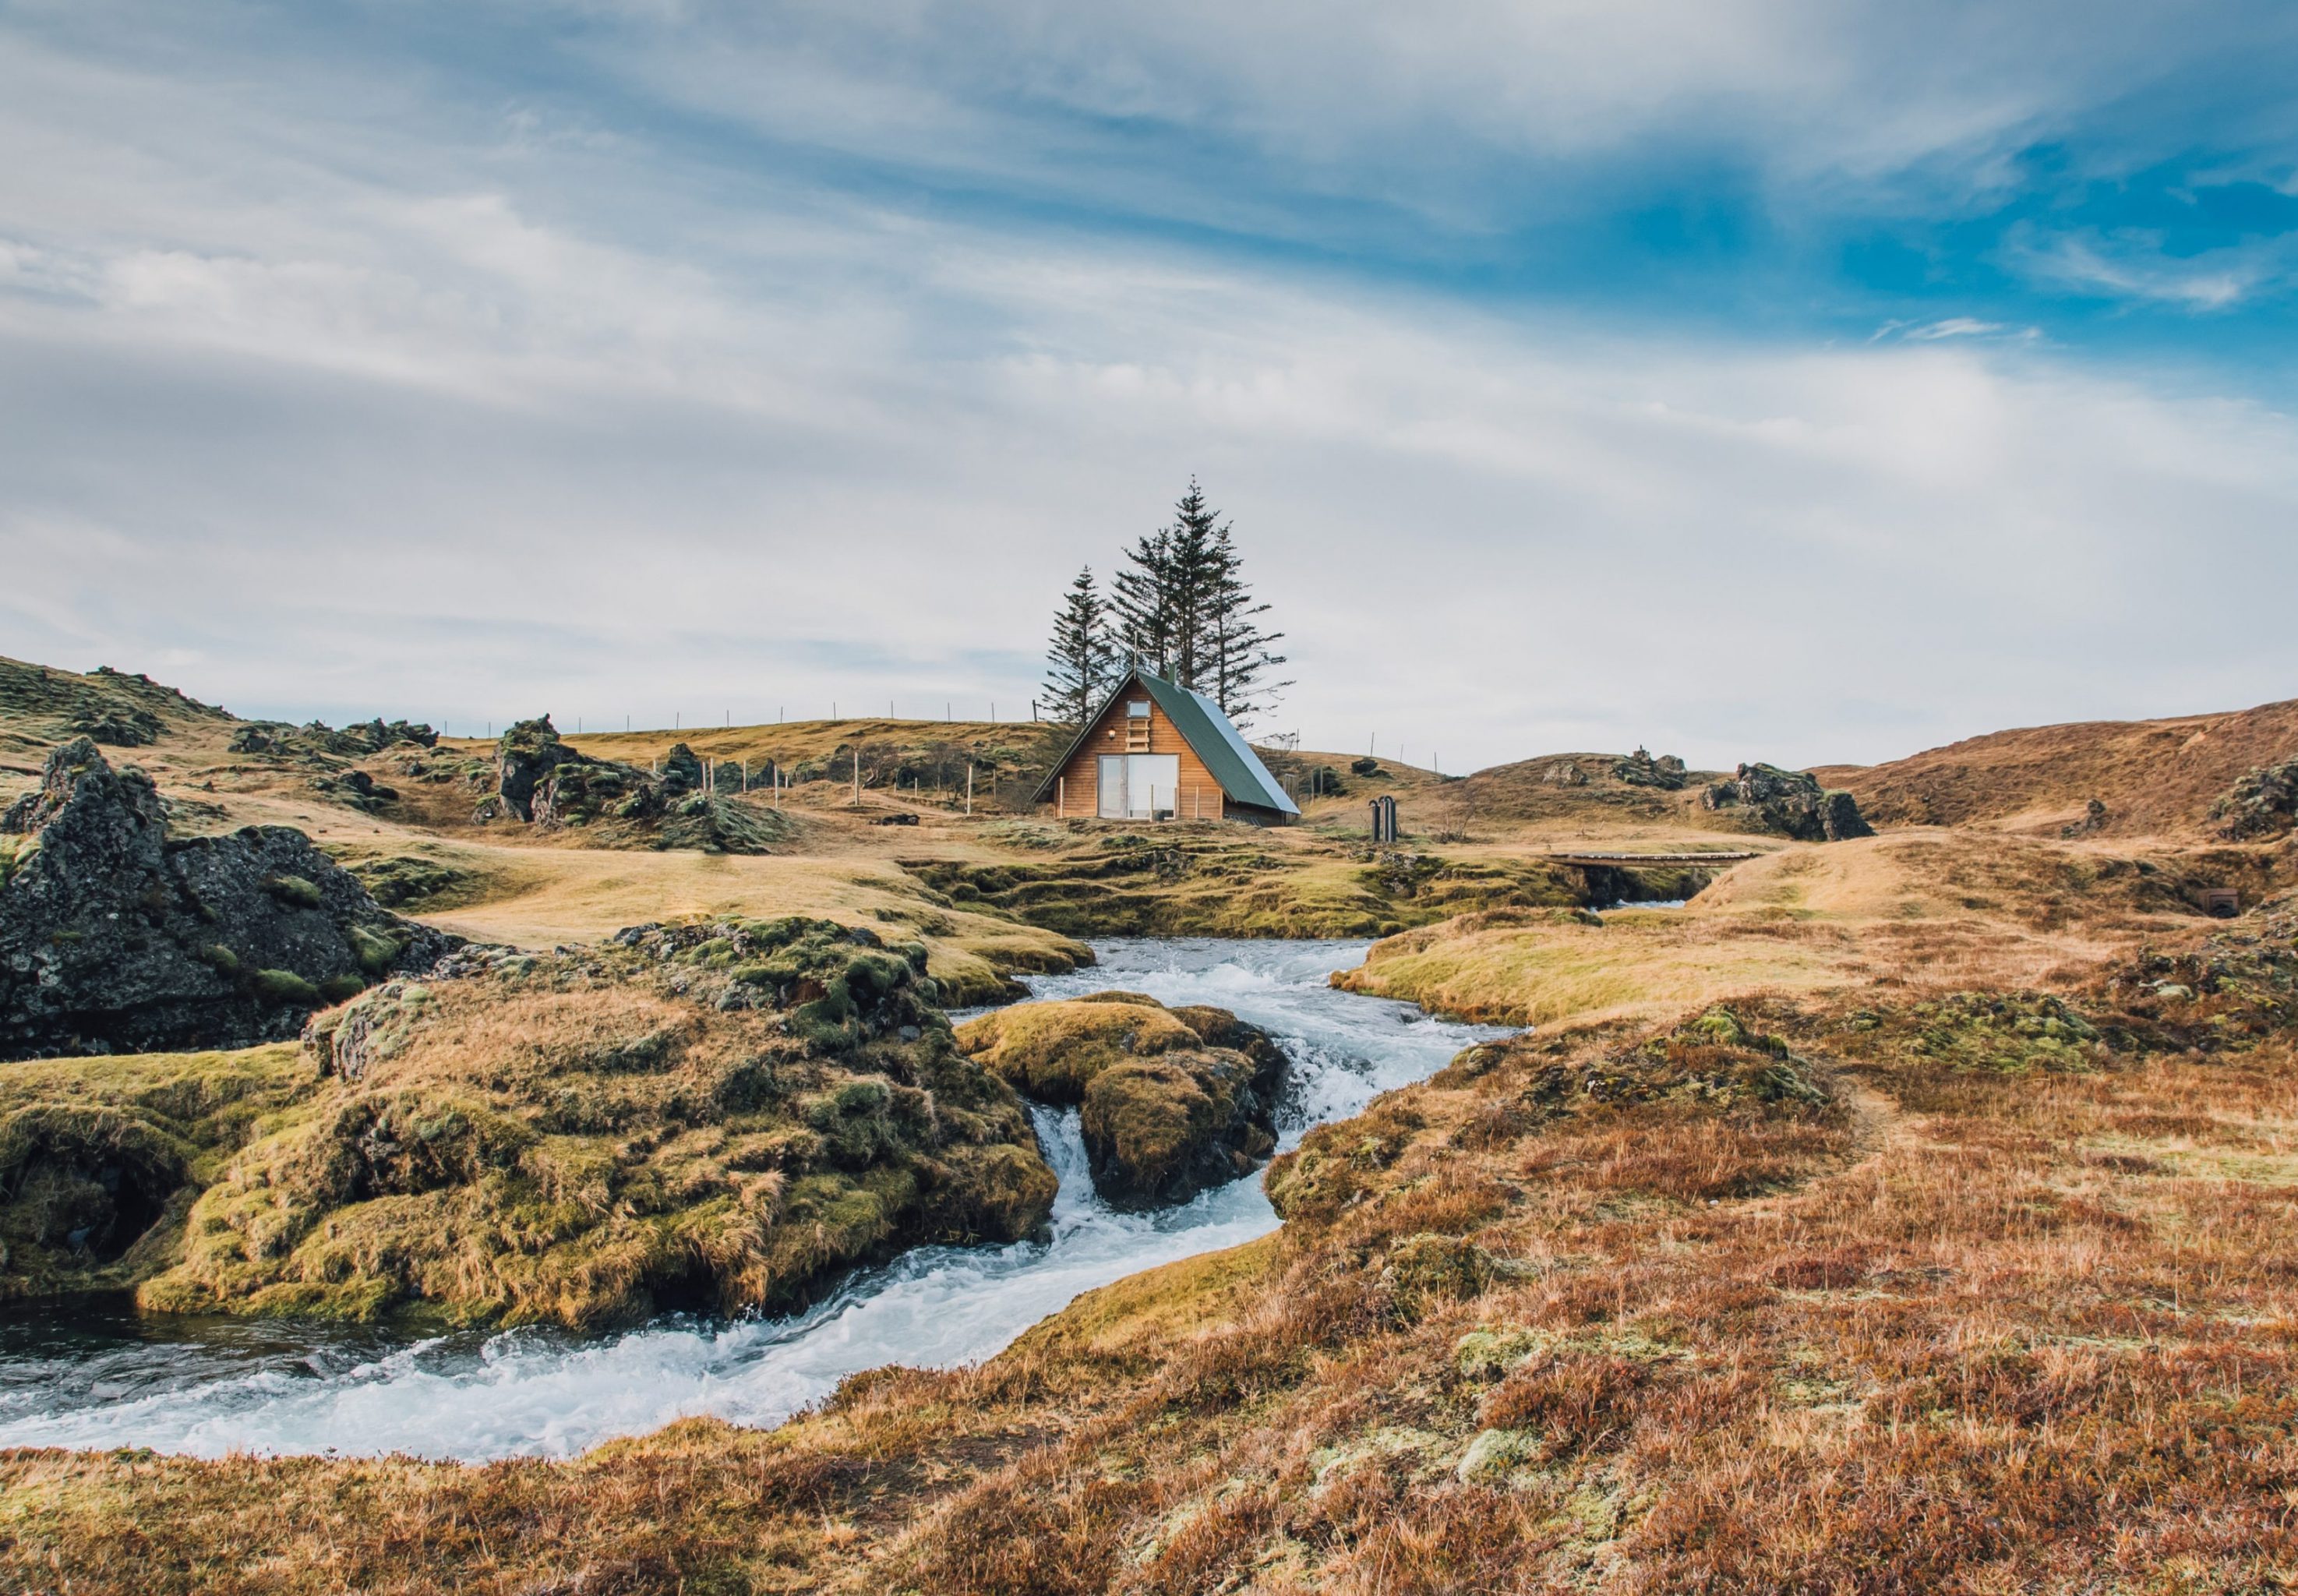 10 unikke hytter i Island med afstandsgaranti